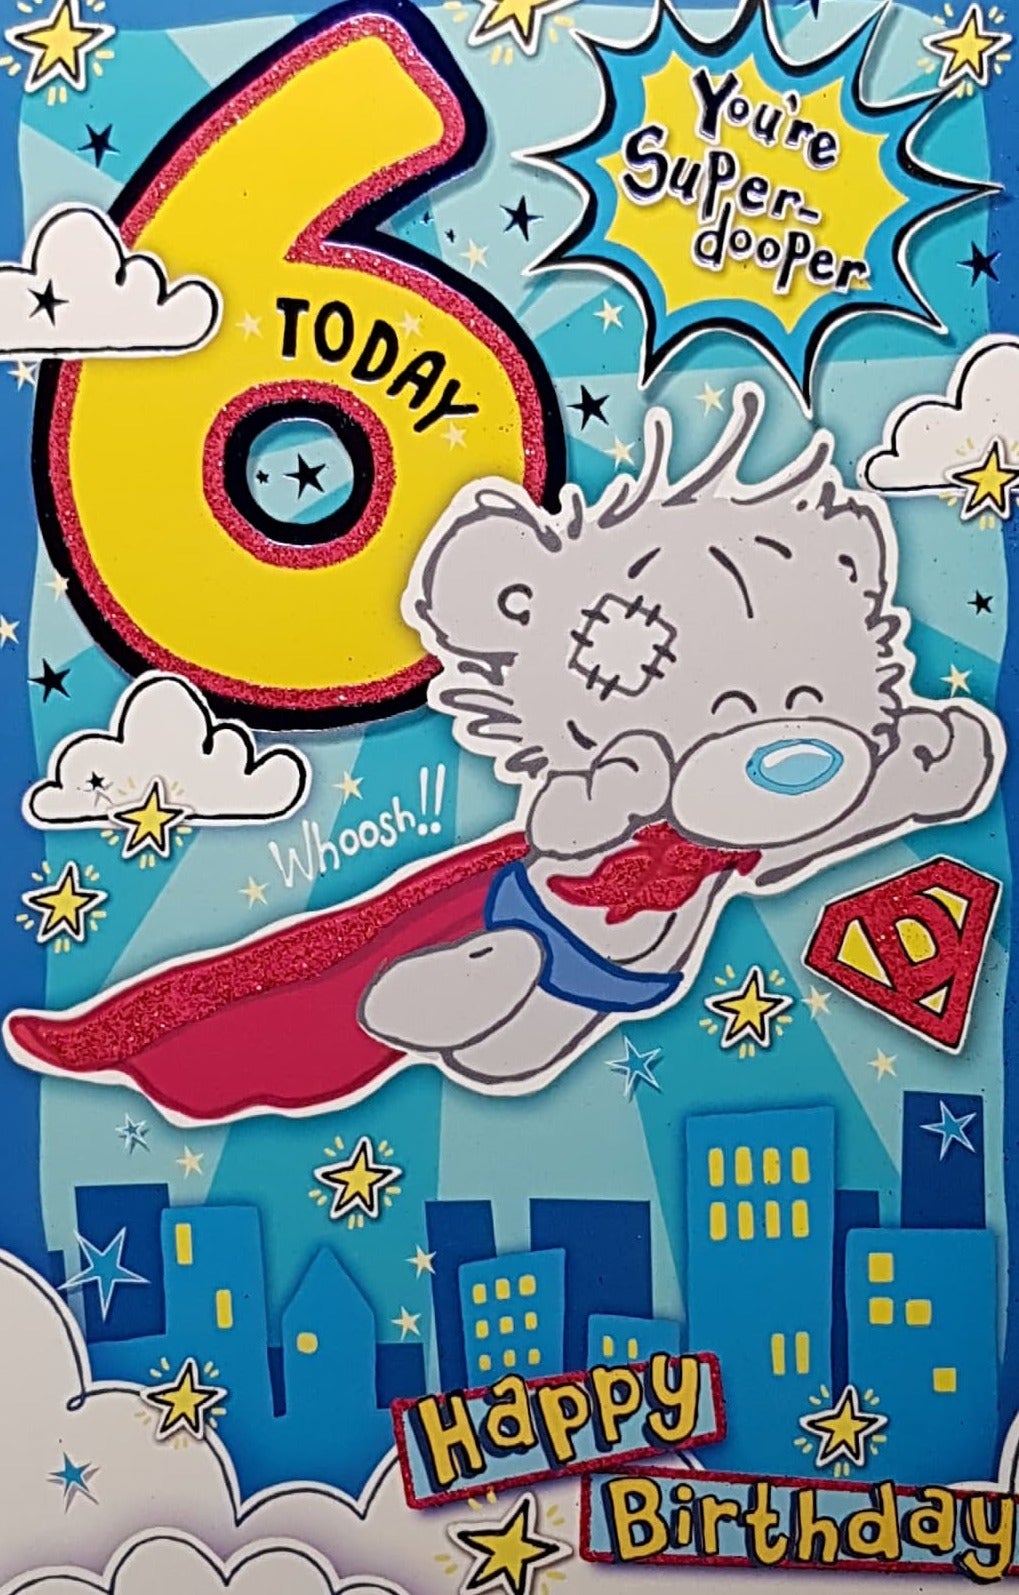 Age 6 Birthday Card - Teddy Super Hero Flying Over City